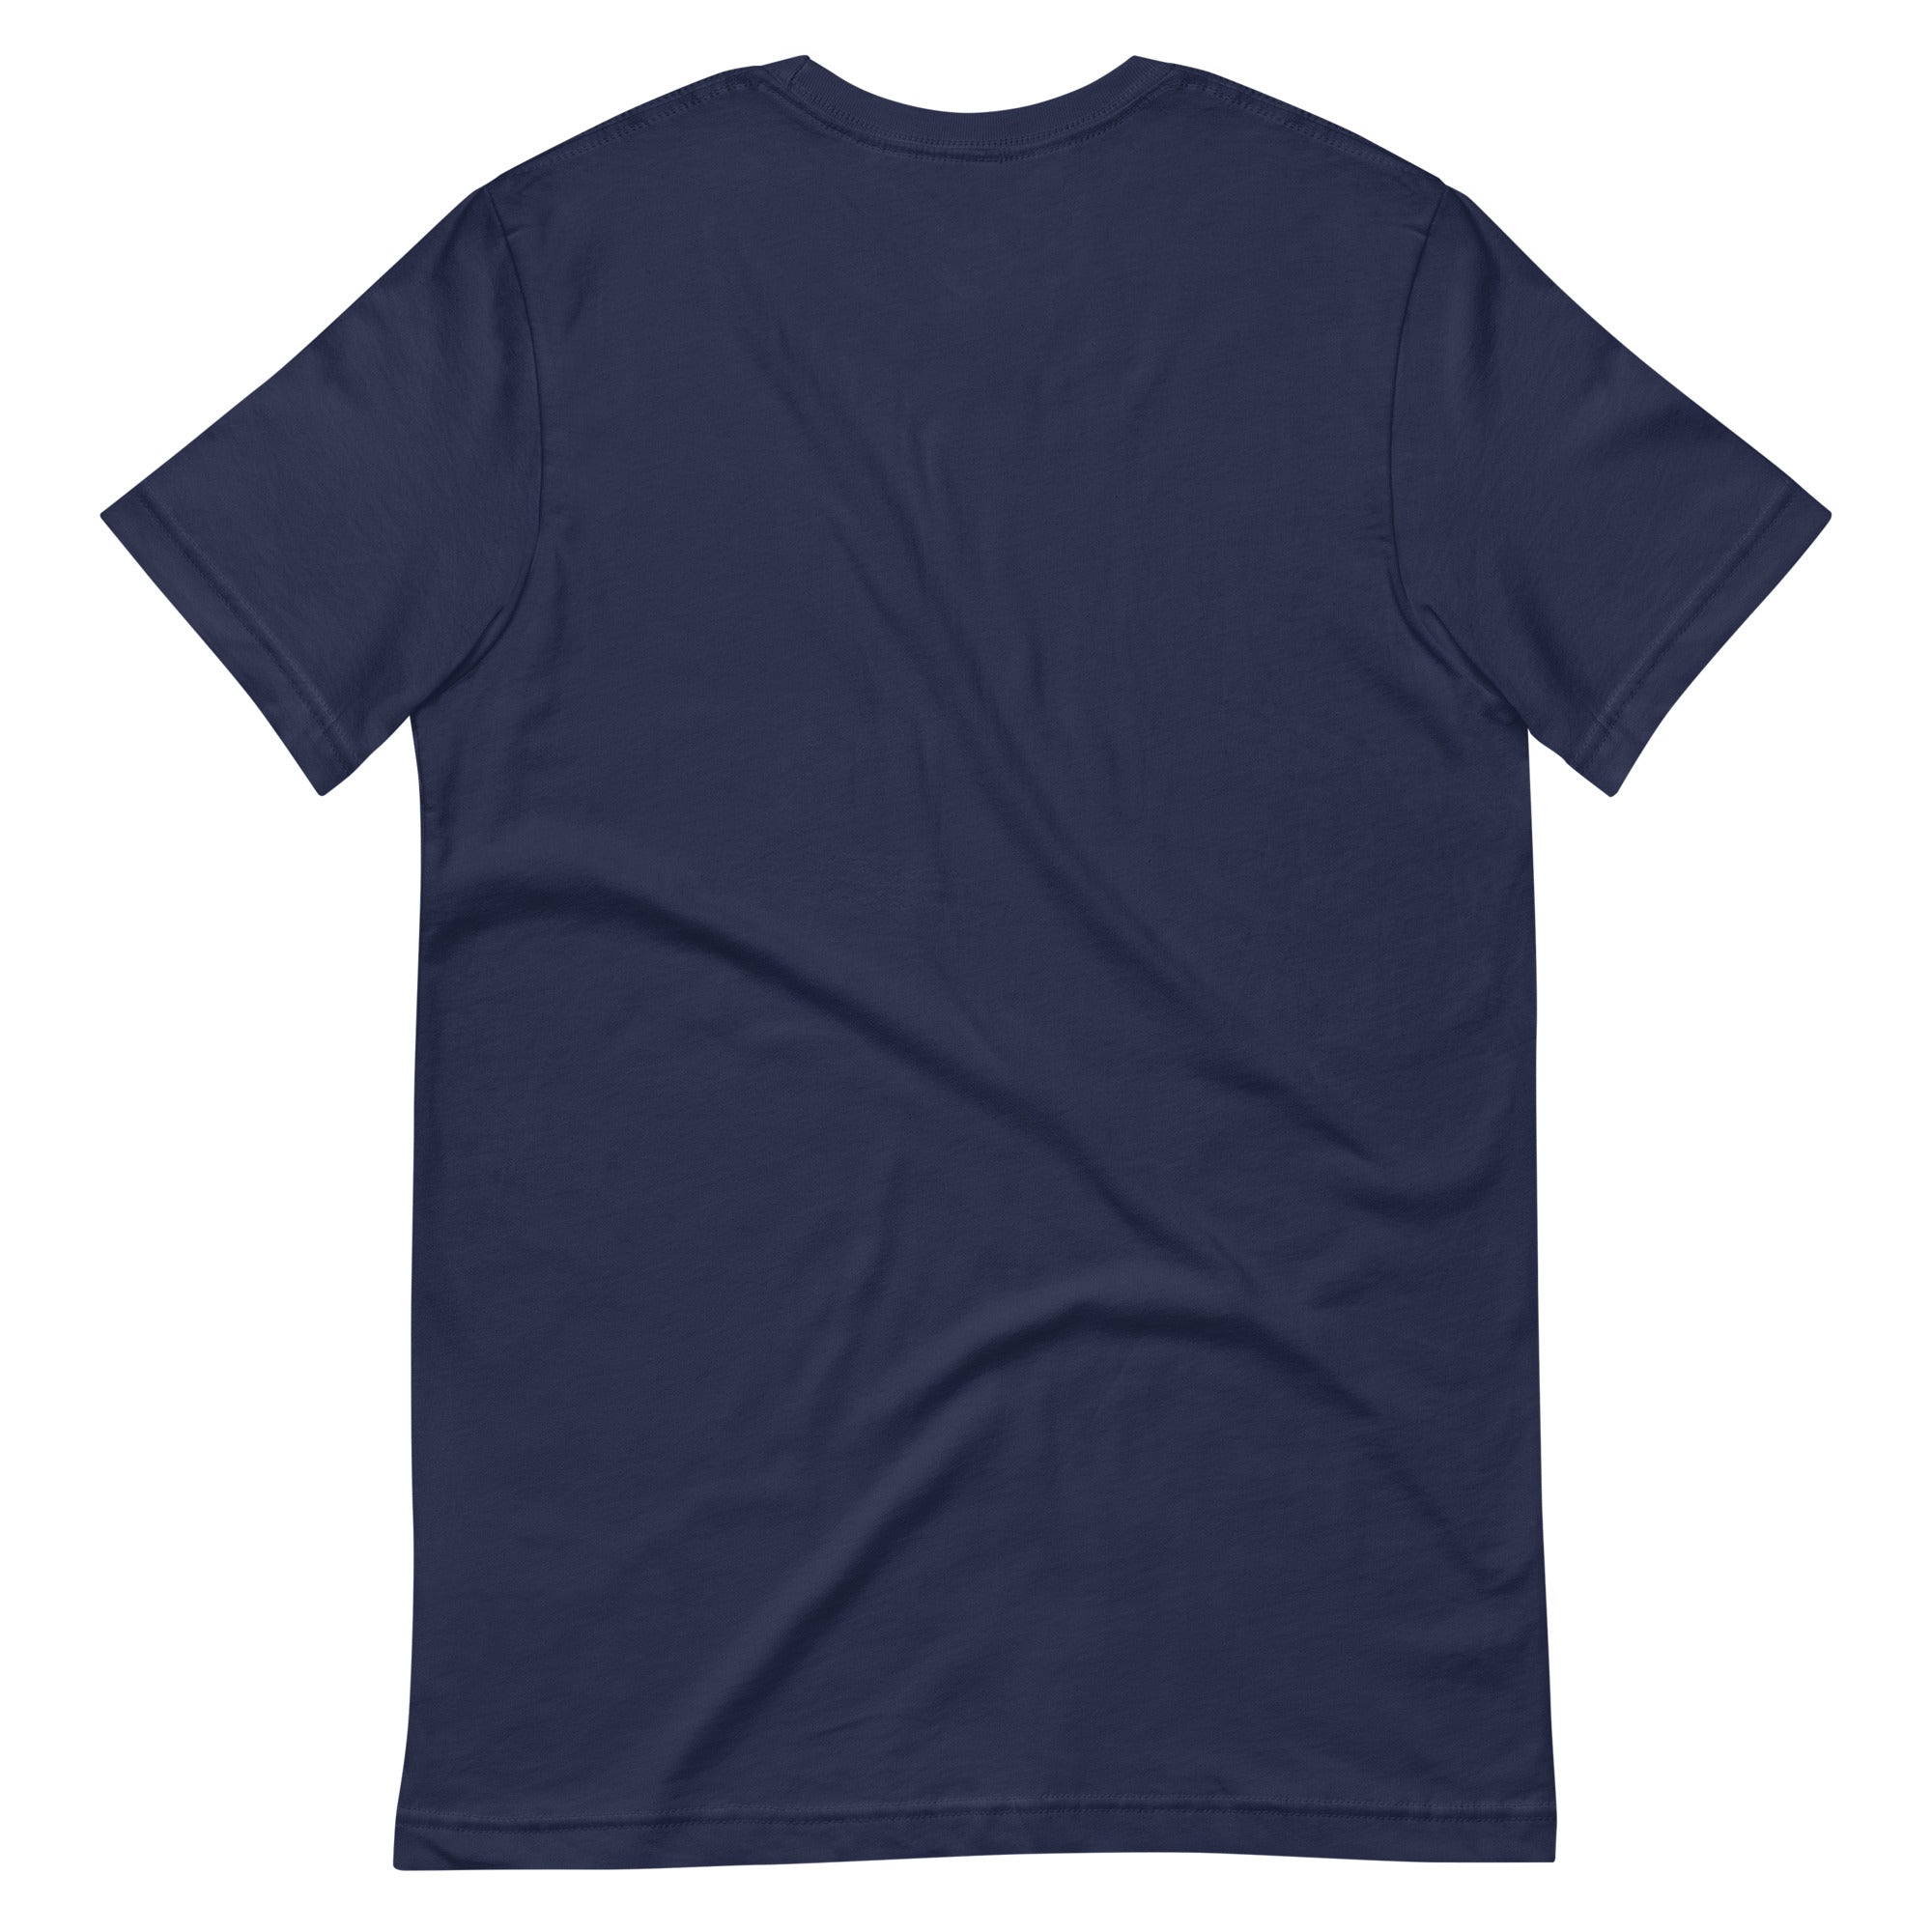 Arches T-Shirt (Navy) - Fremont | Seattle, WA